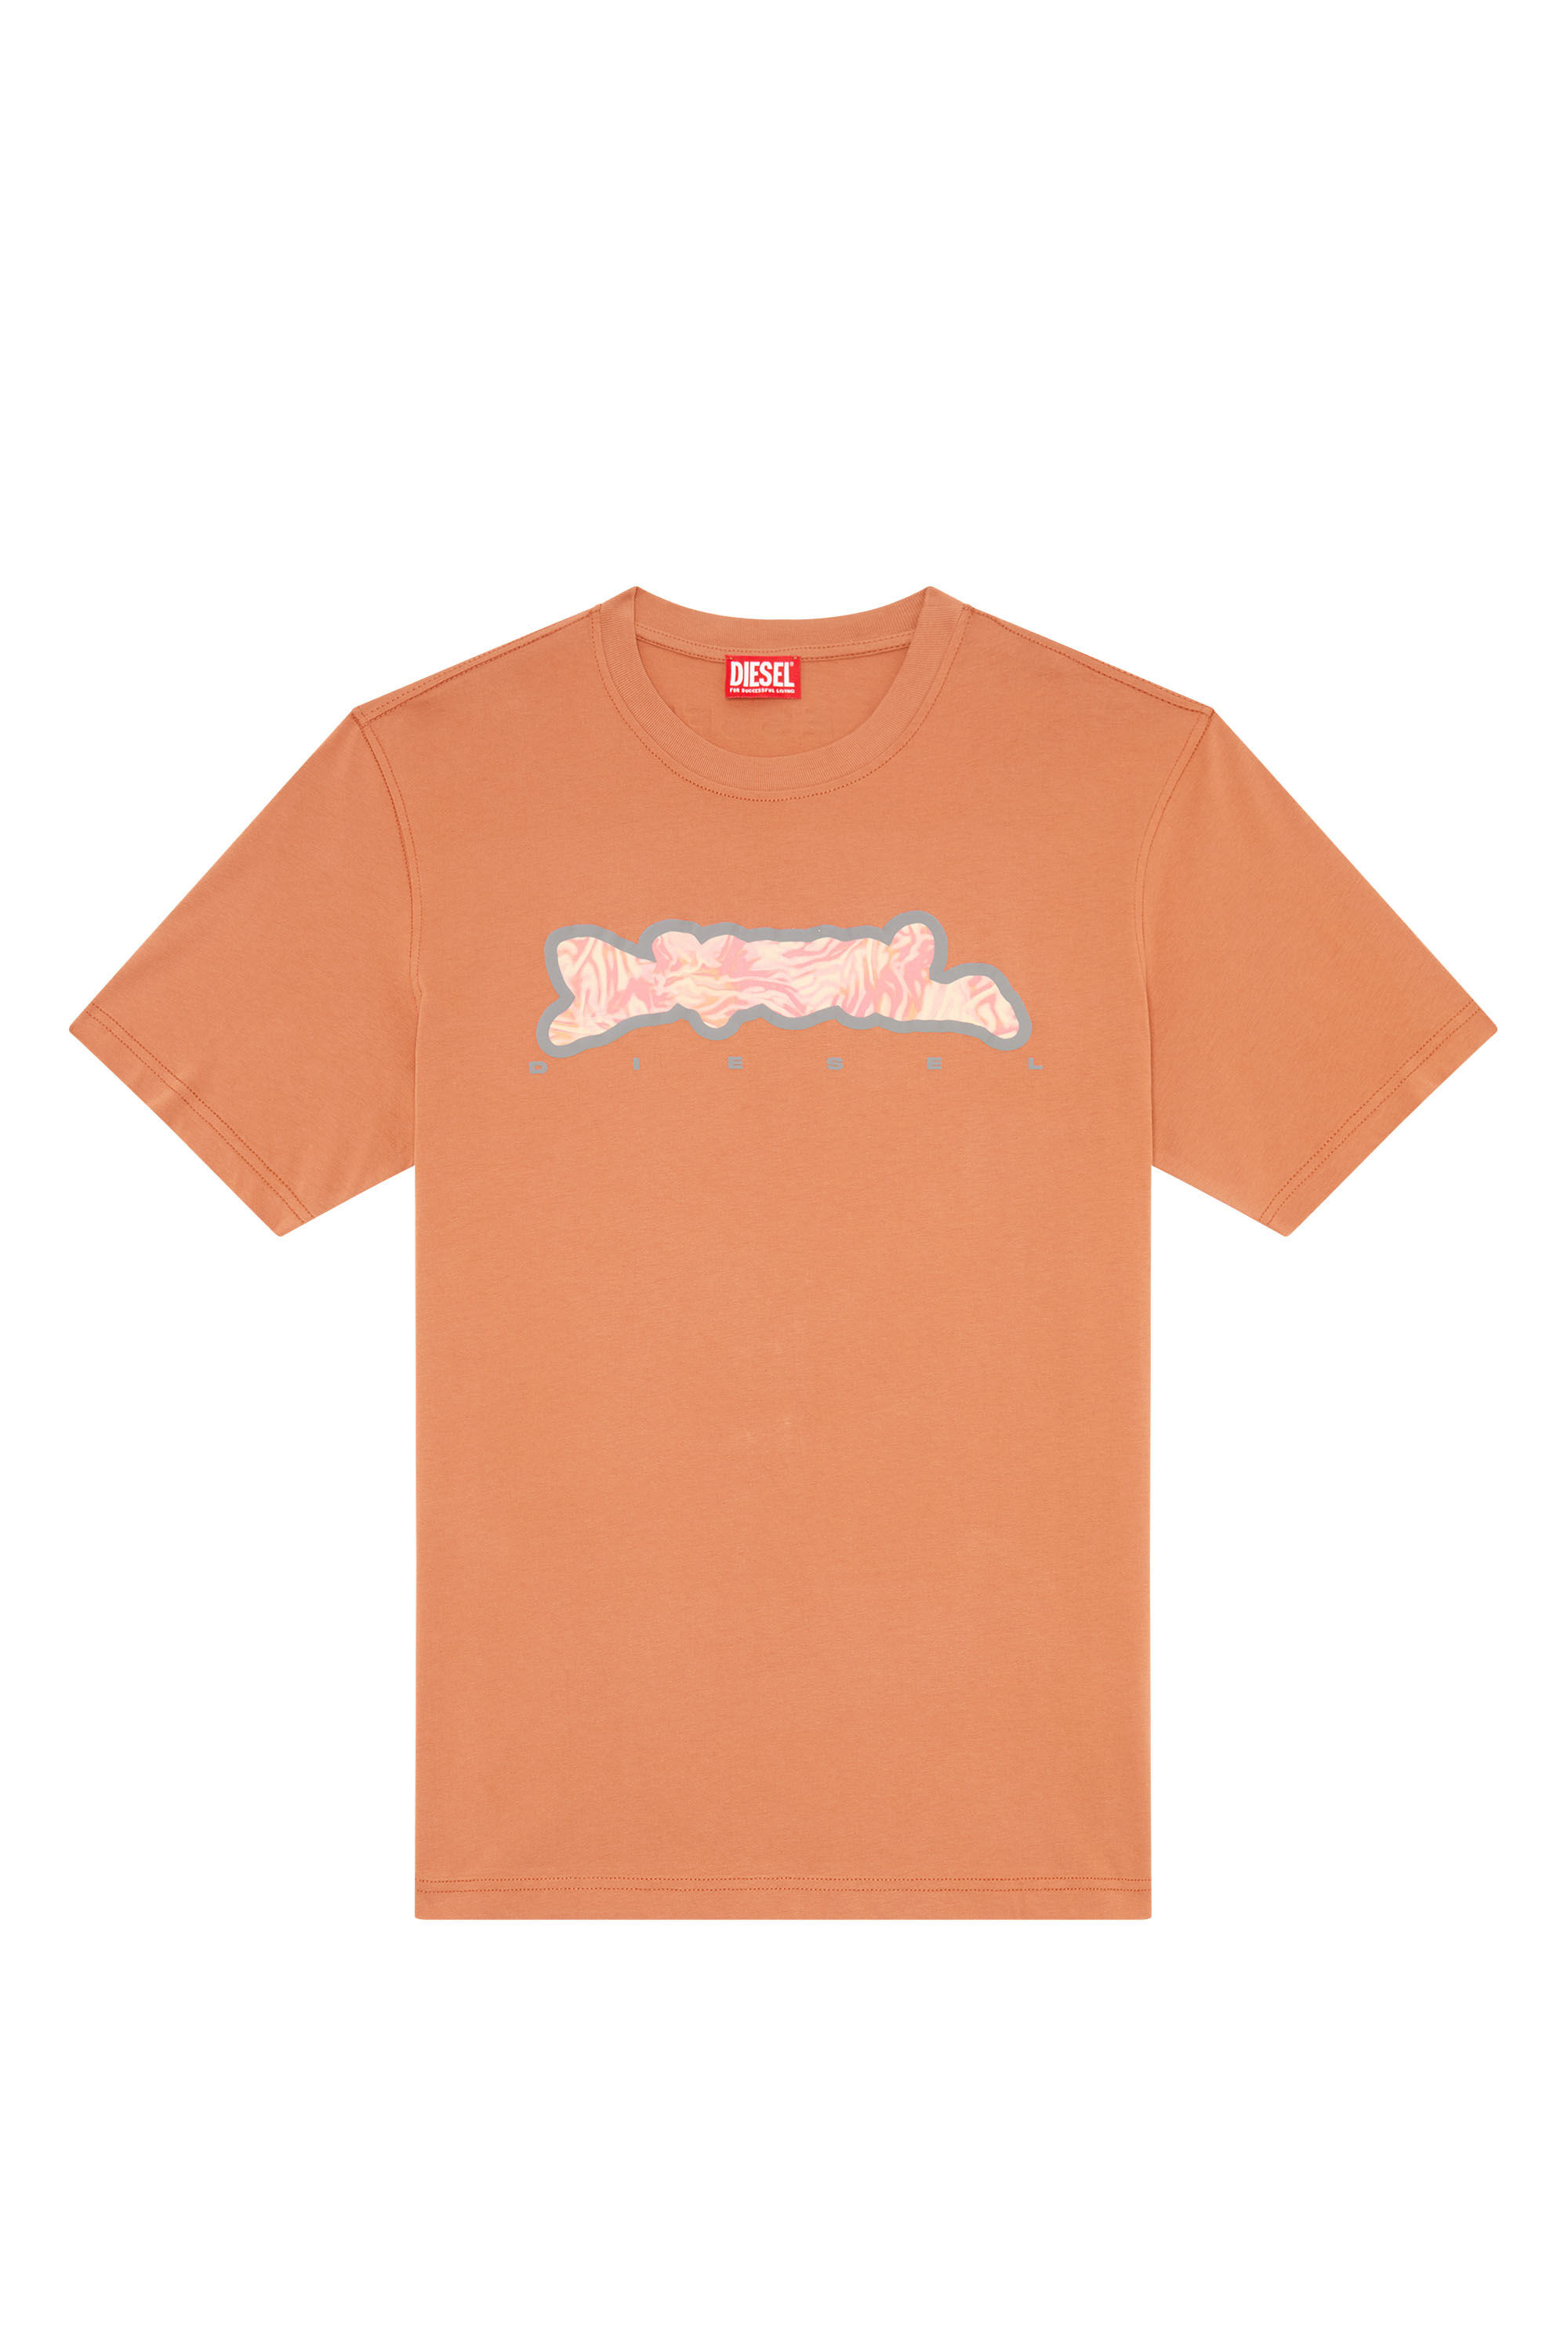 Diesel - T-JUST-N16, Man T-shirt with zebra-camo motif in Orange - Image 1